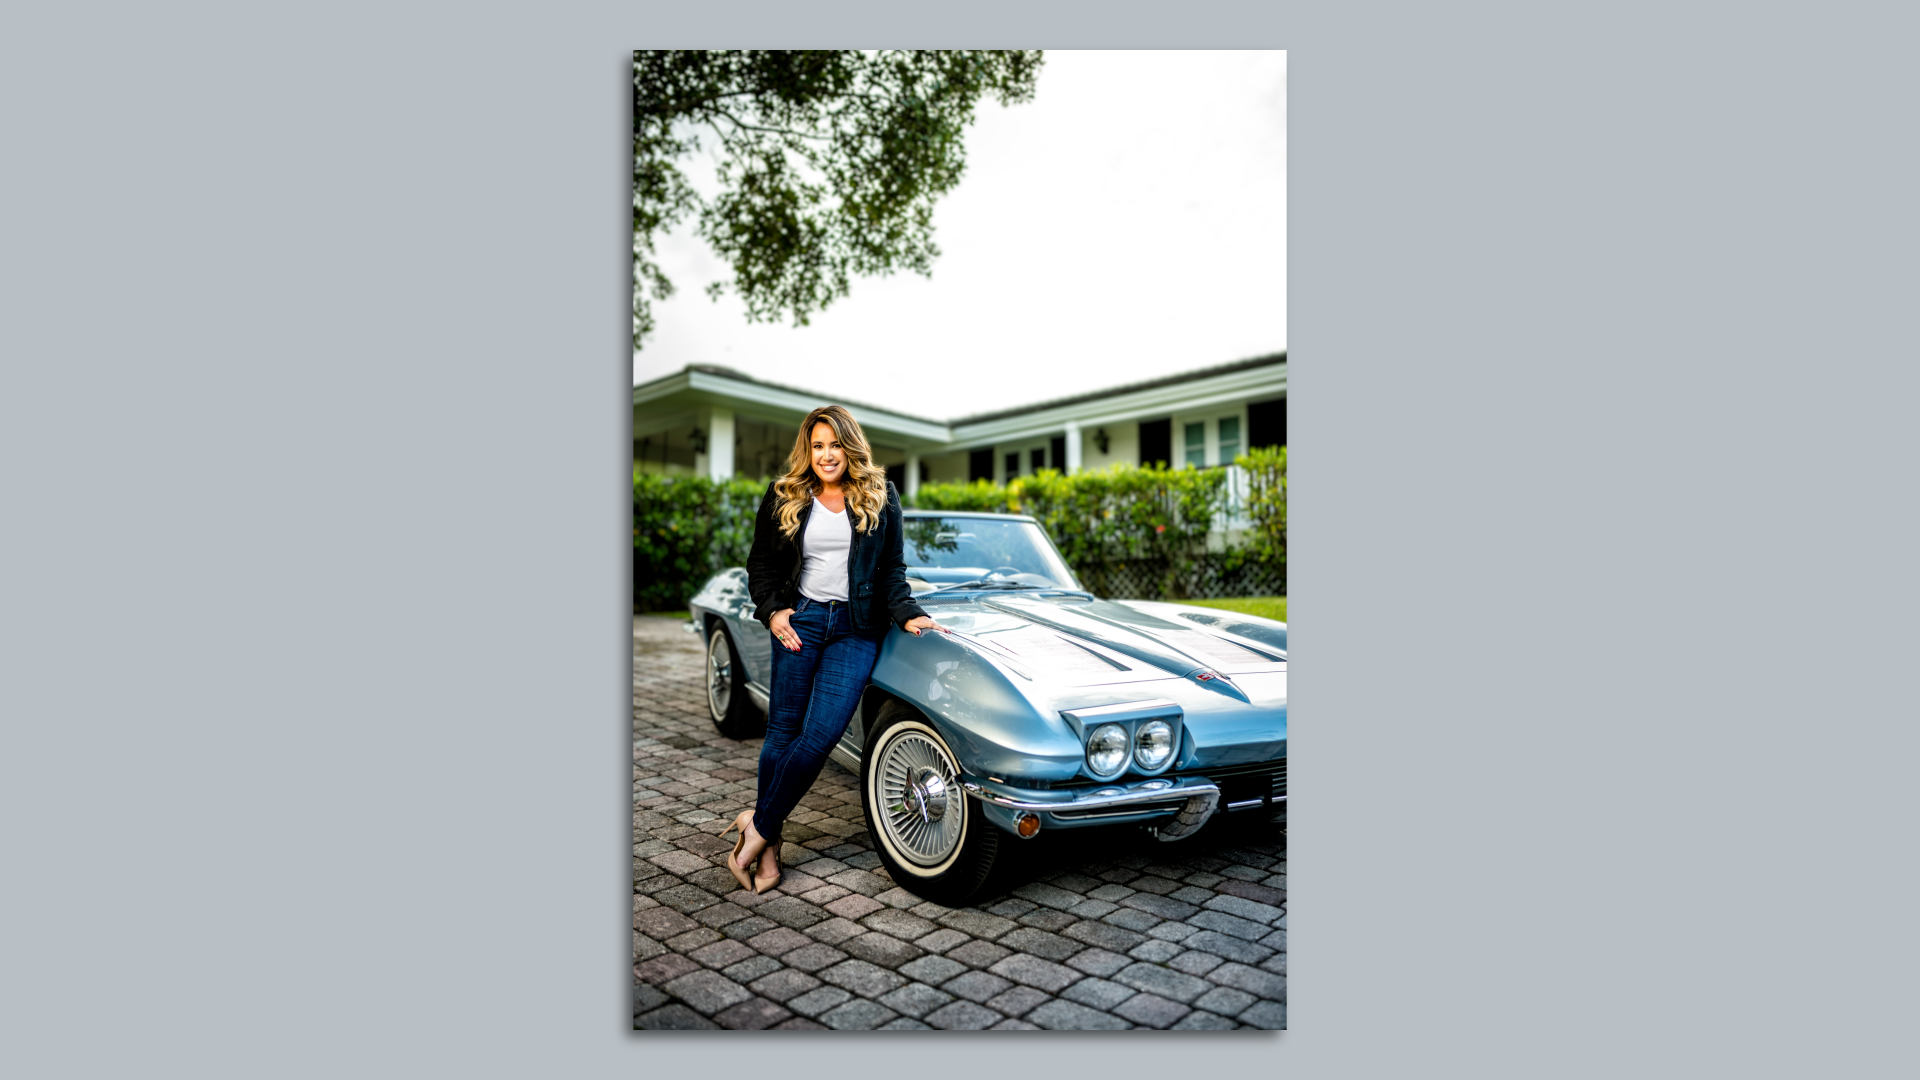 Lissette Calderon wears heels, jeans and a blazer while leaning against a vintage Corvette Stingray 